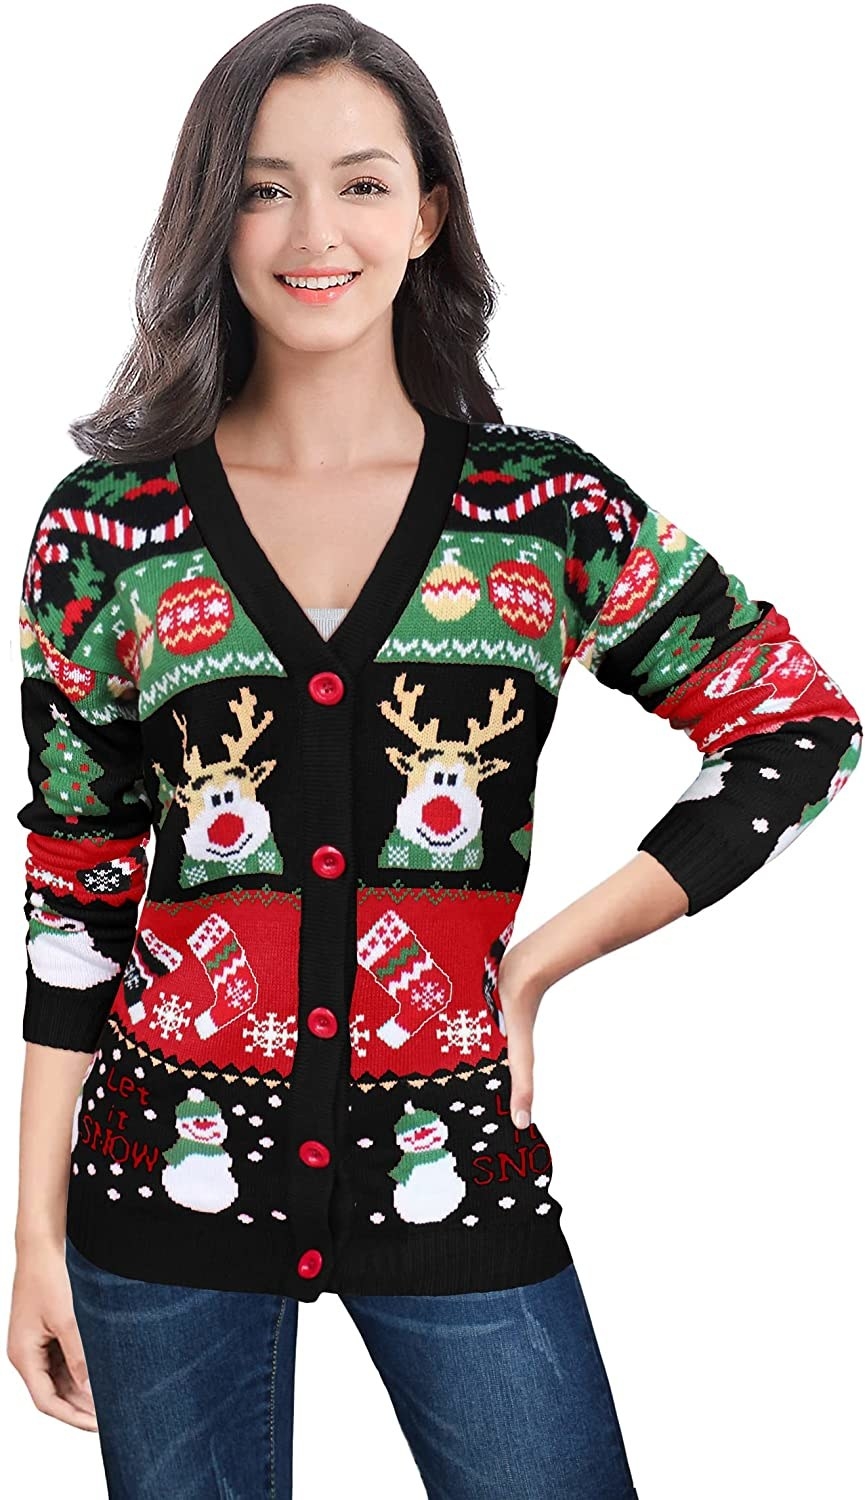 Model wearing Christmas-themed cardigan